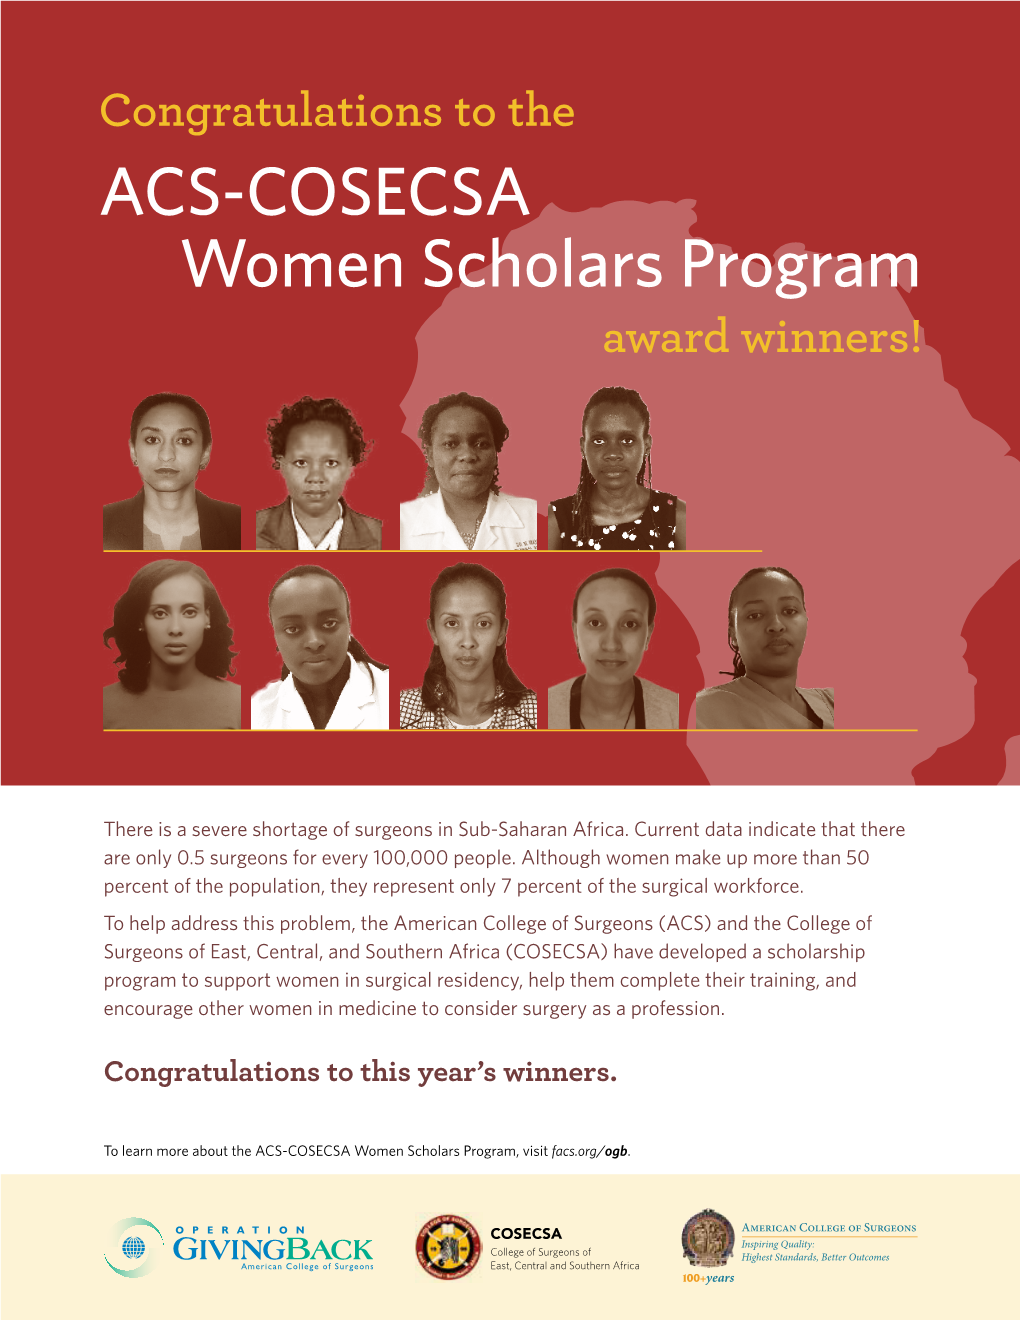 ACS-COSECSA Women Scholars Program Award Winners!